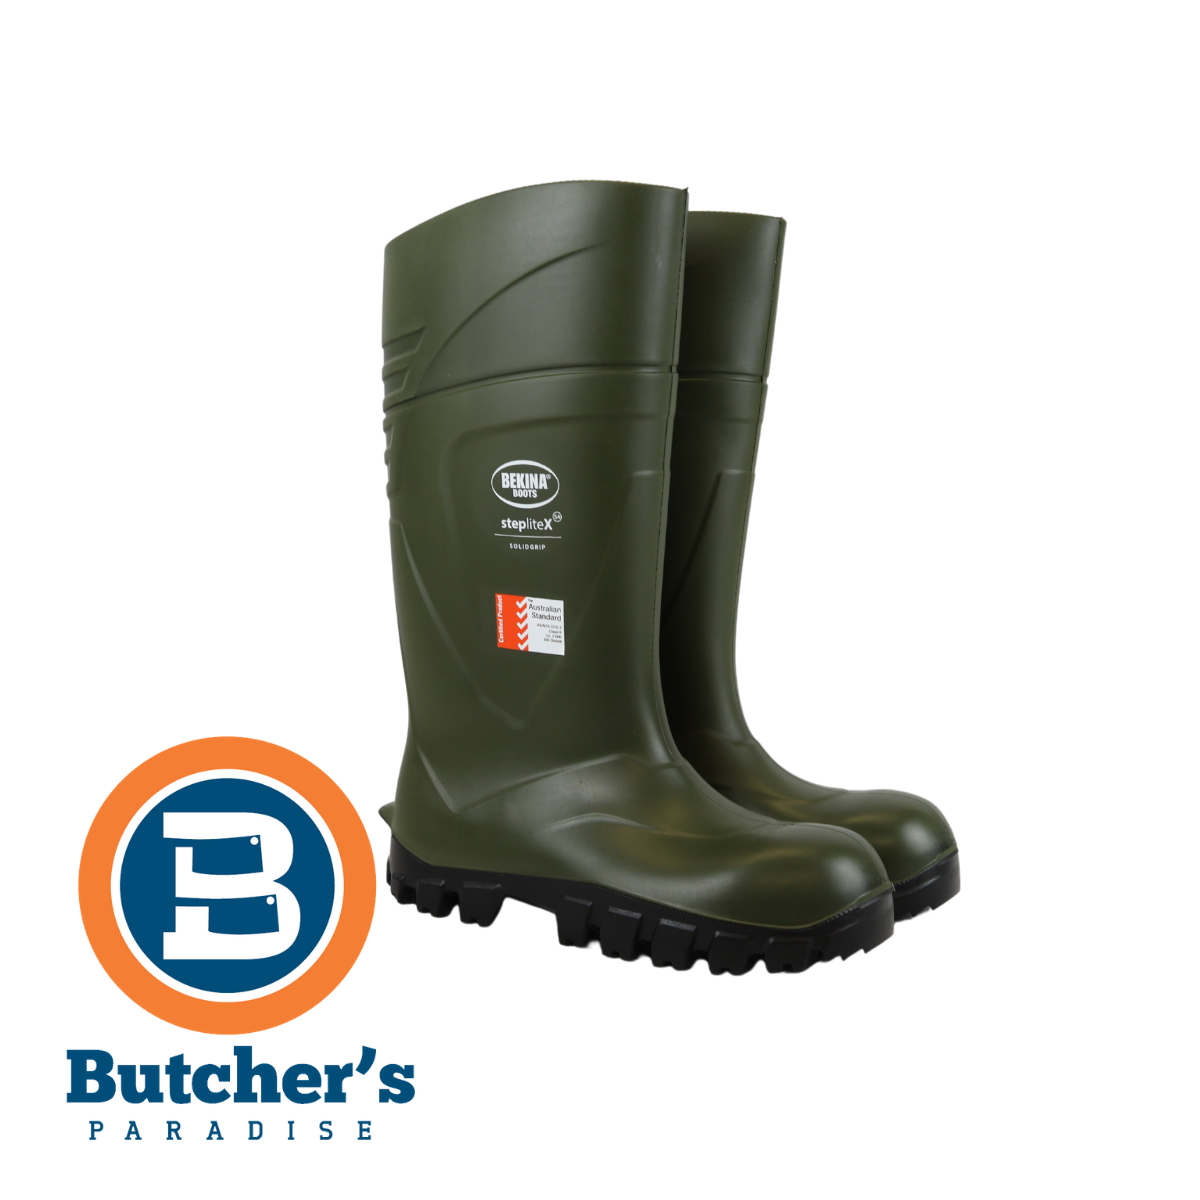 Butchers Bekina Green Boots